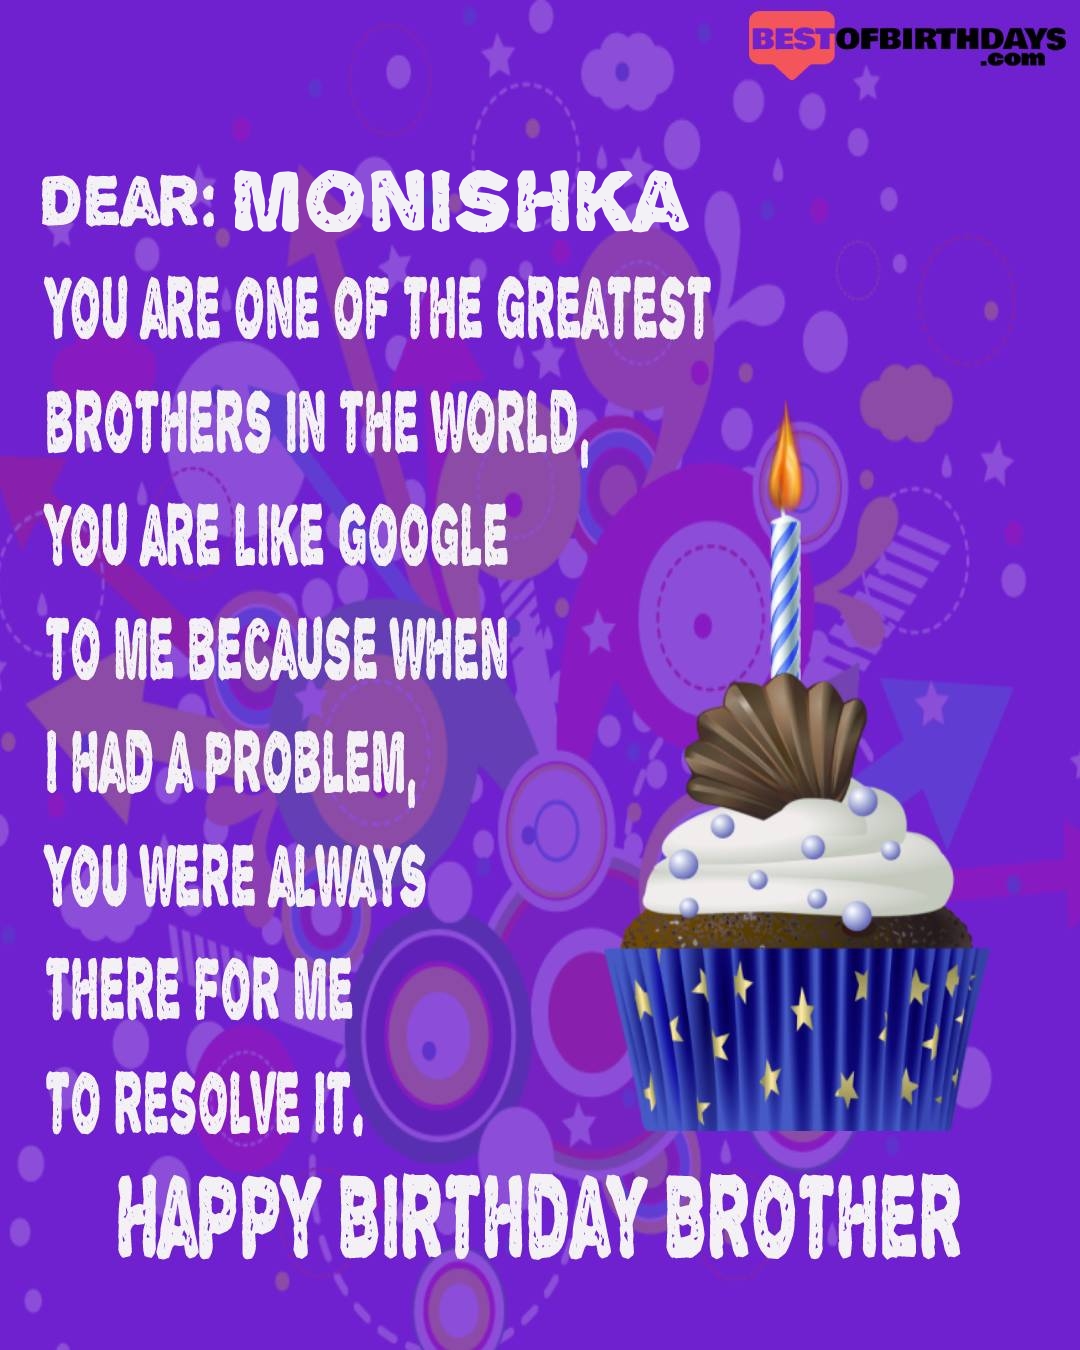 Happy birthday monishka bhai brother bro